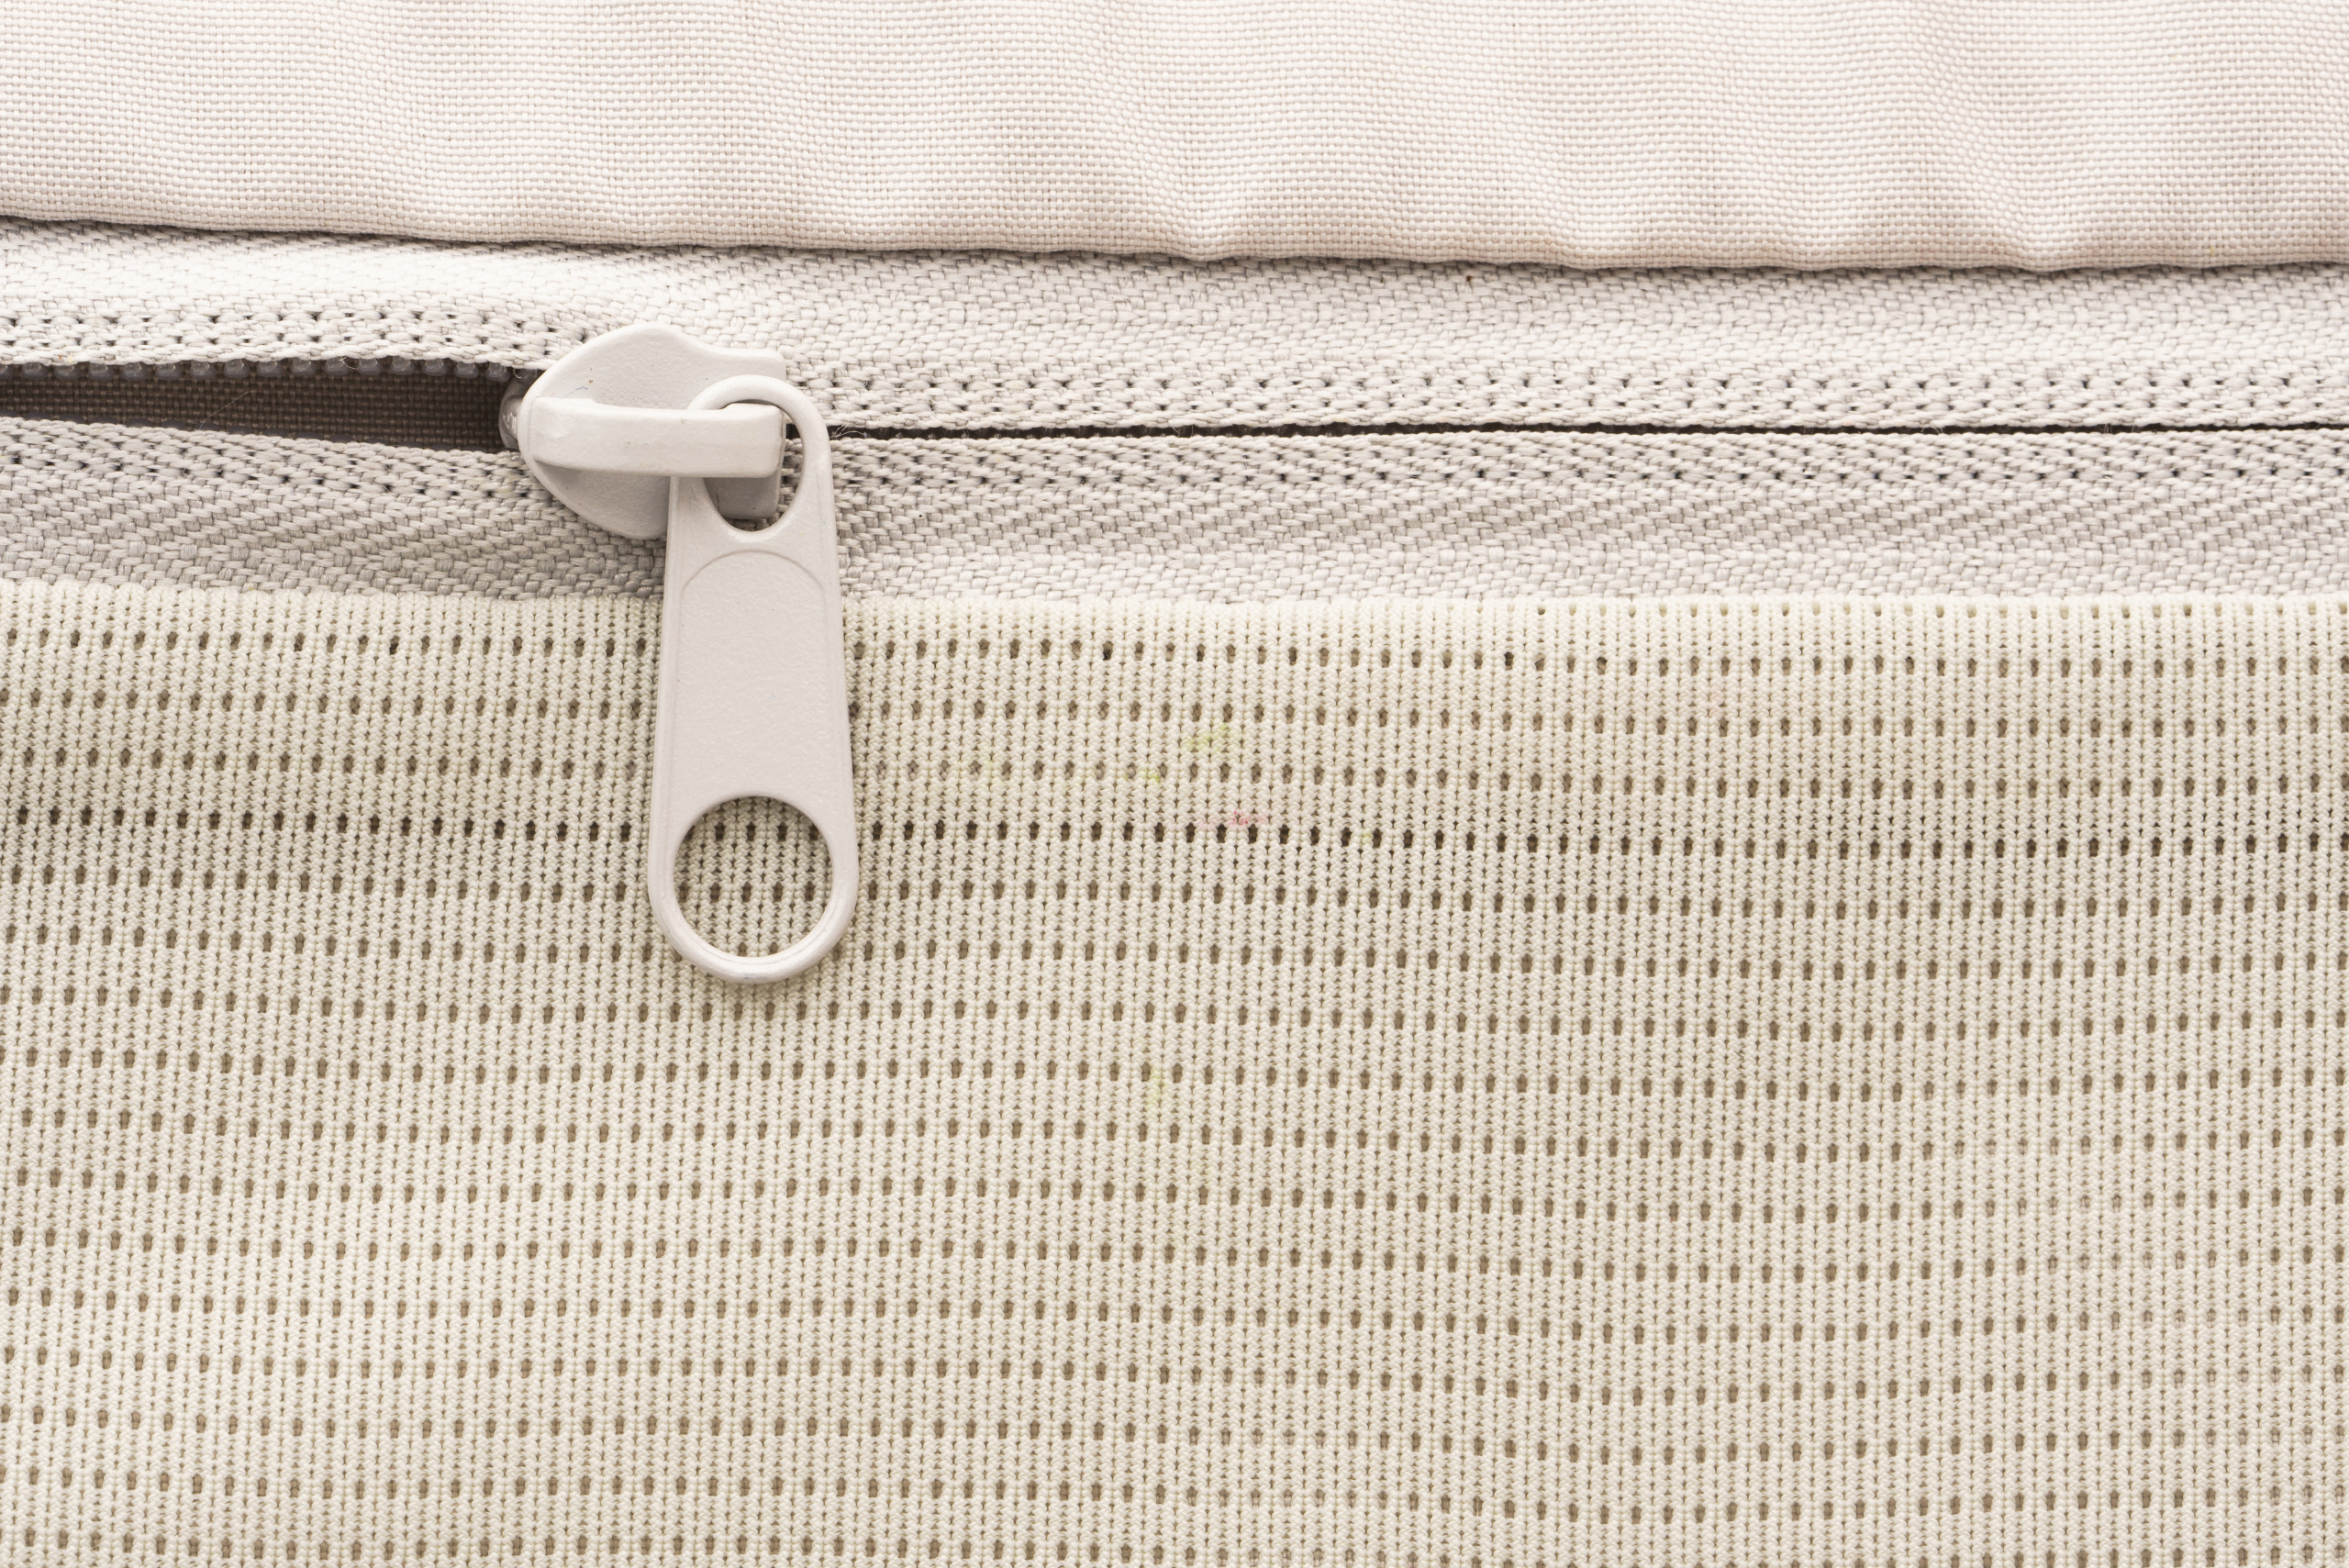 Closeup of a beige backpack zipper.